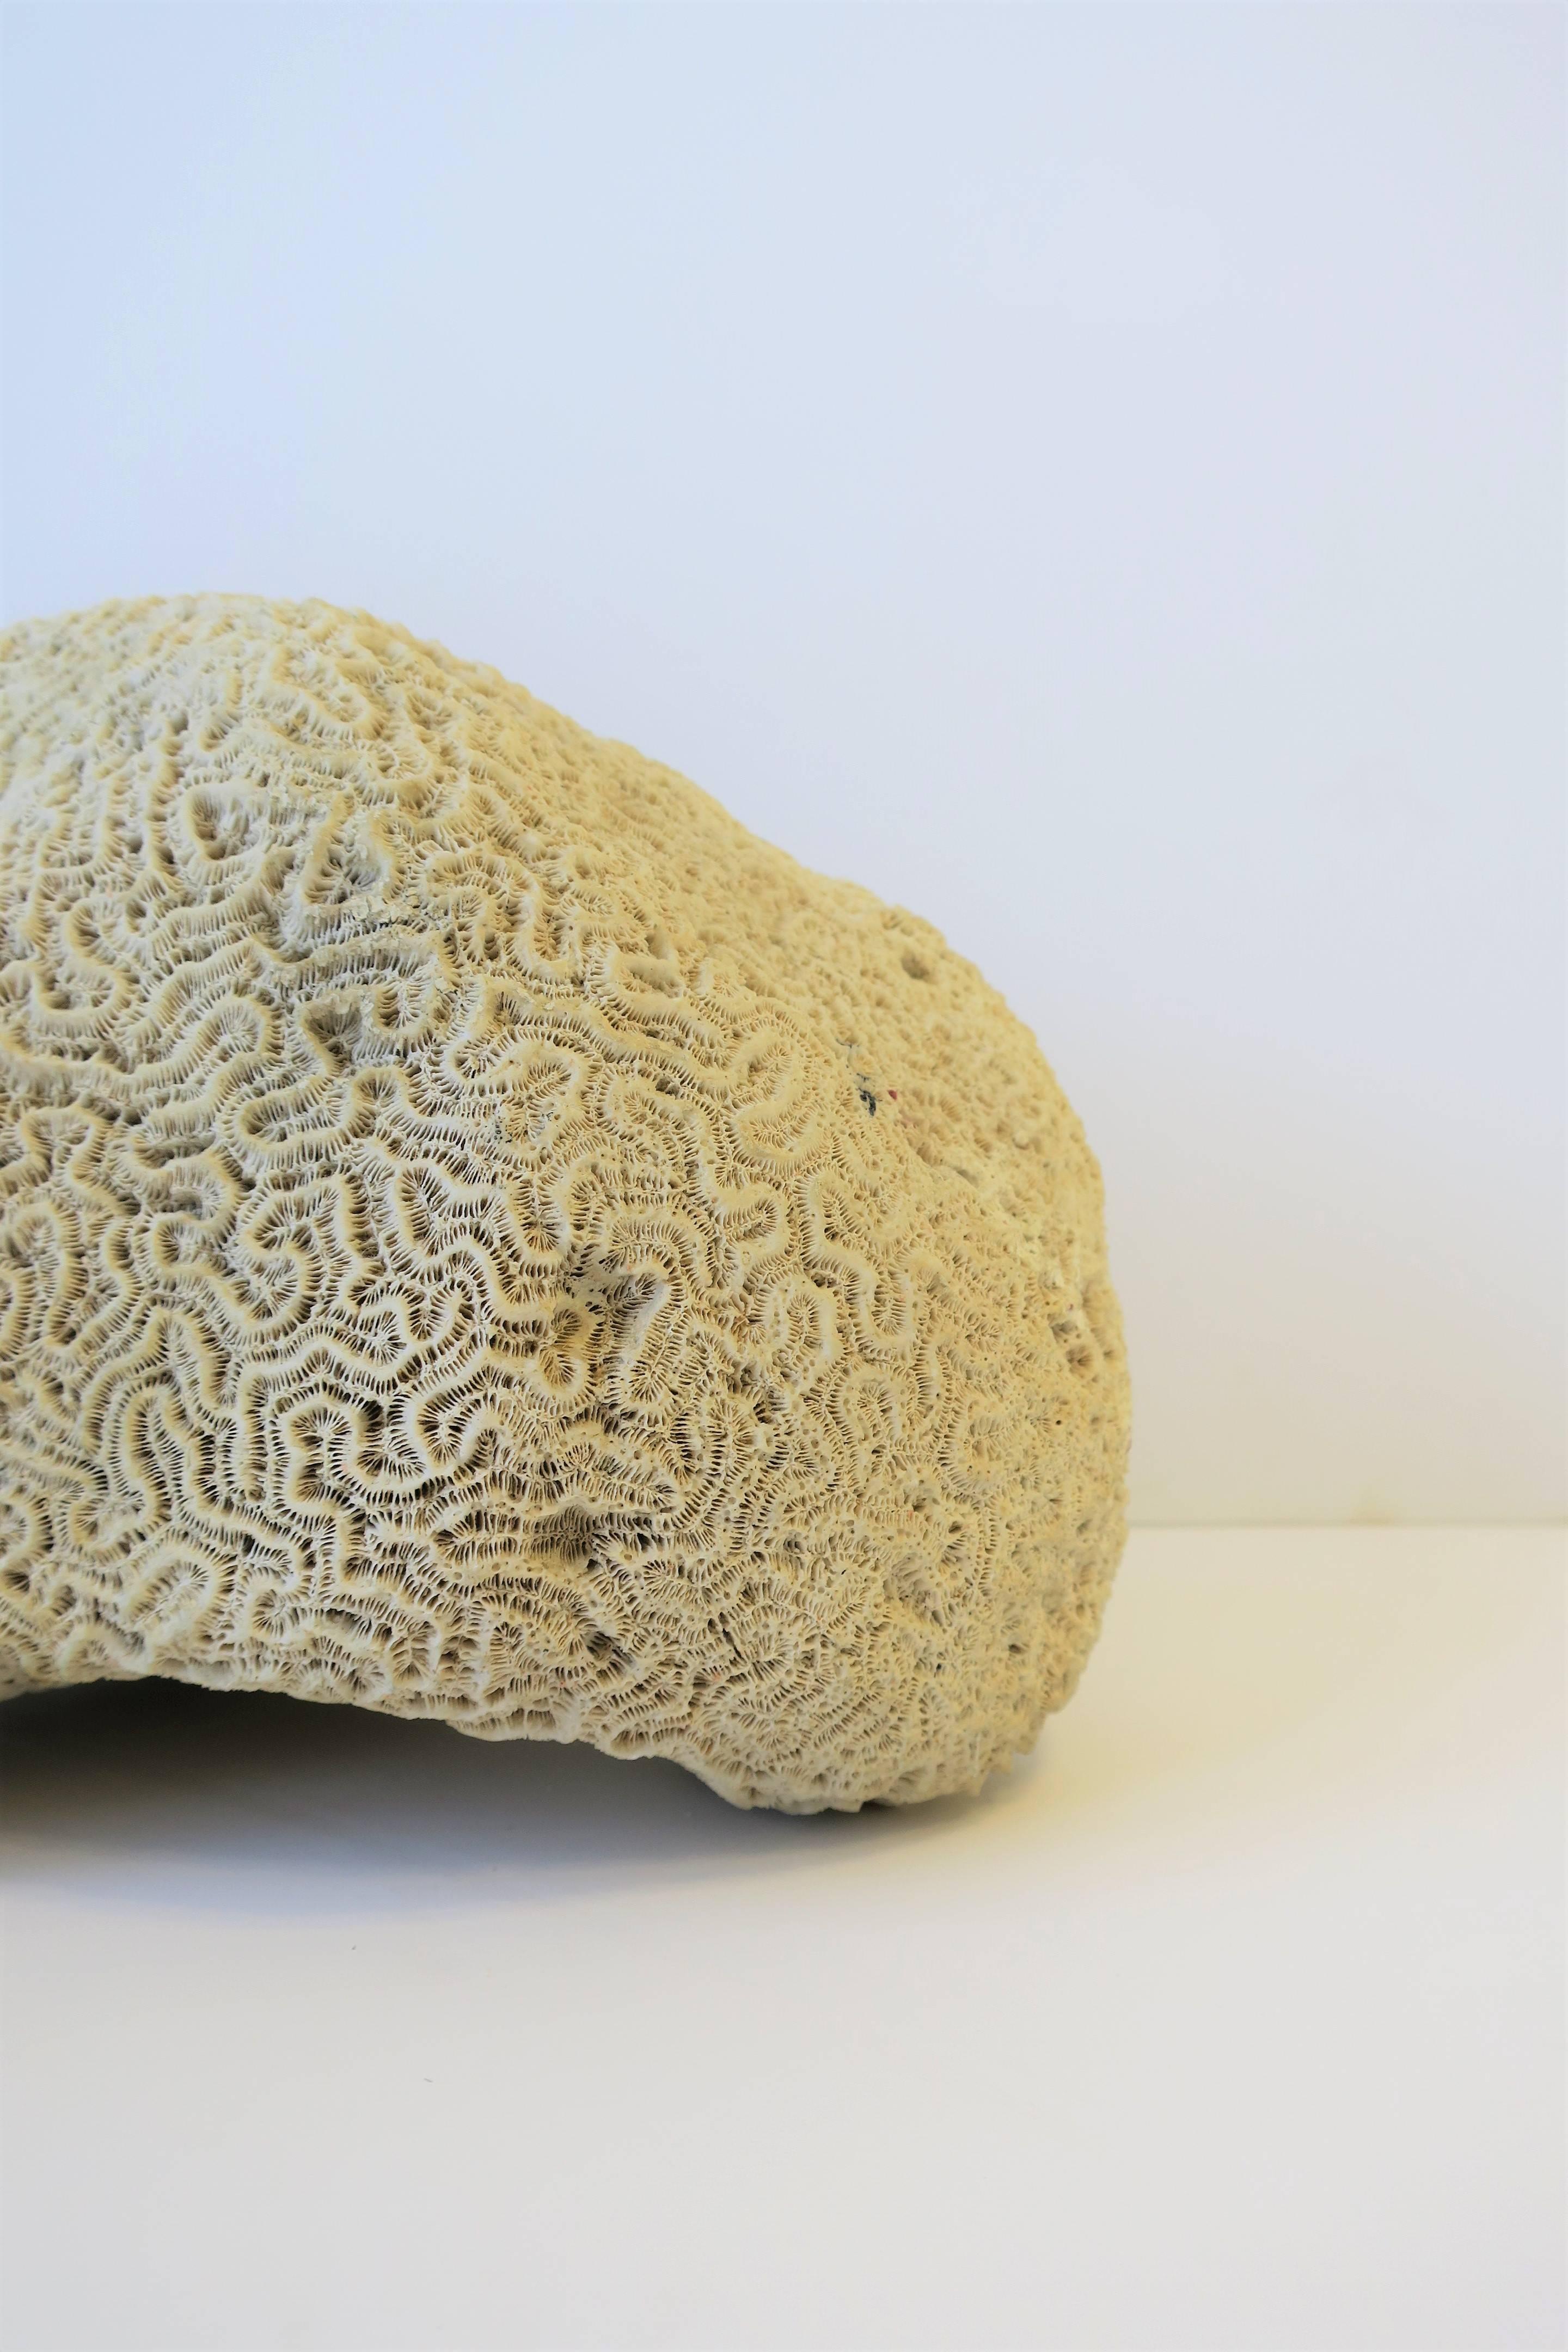 20th Century Brain Coral Natural Specimen For Sale